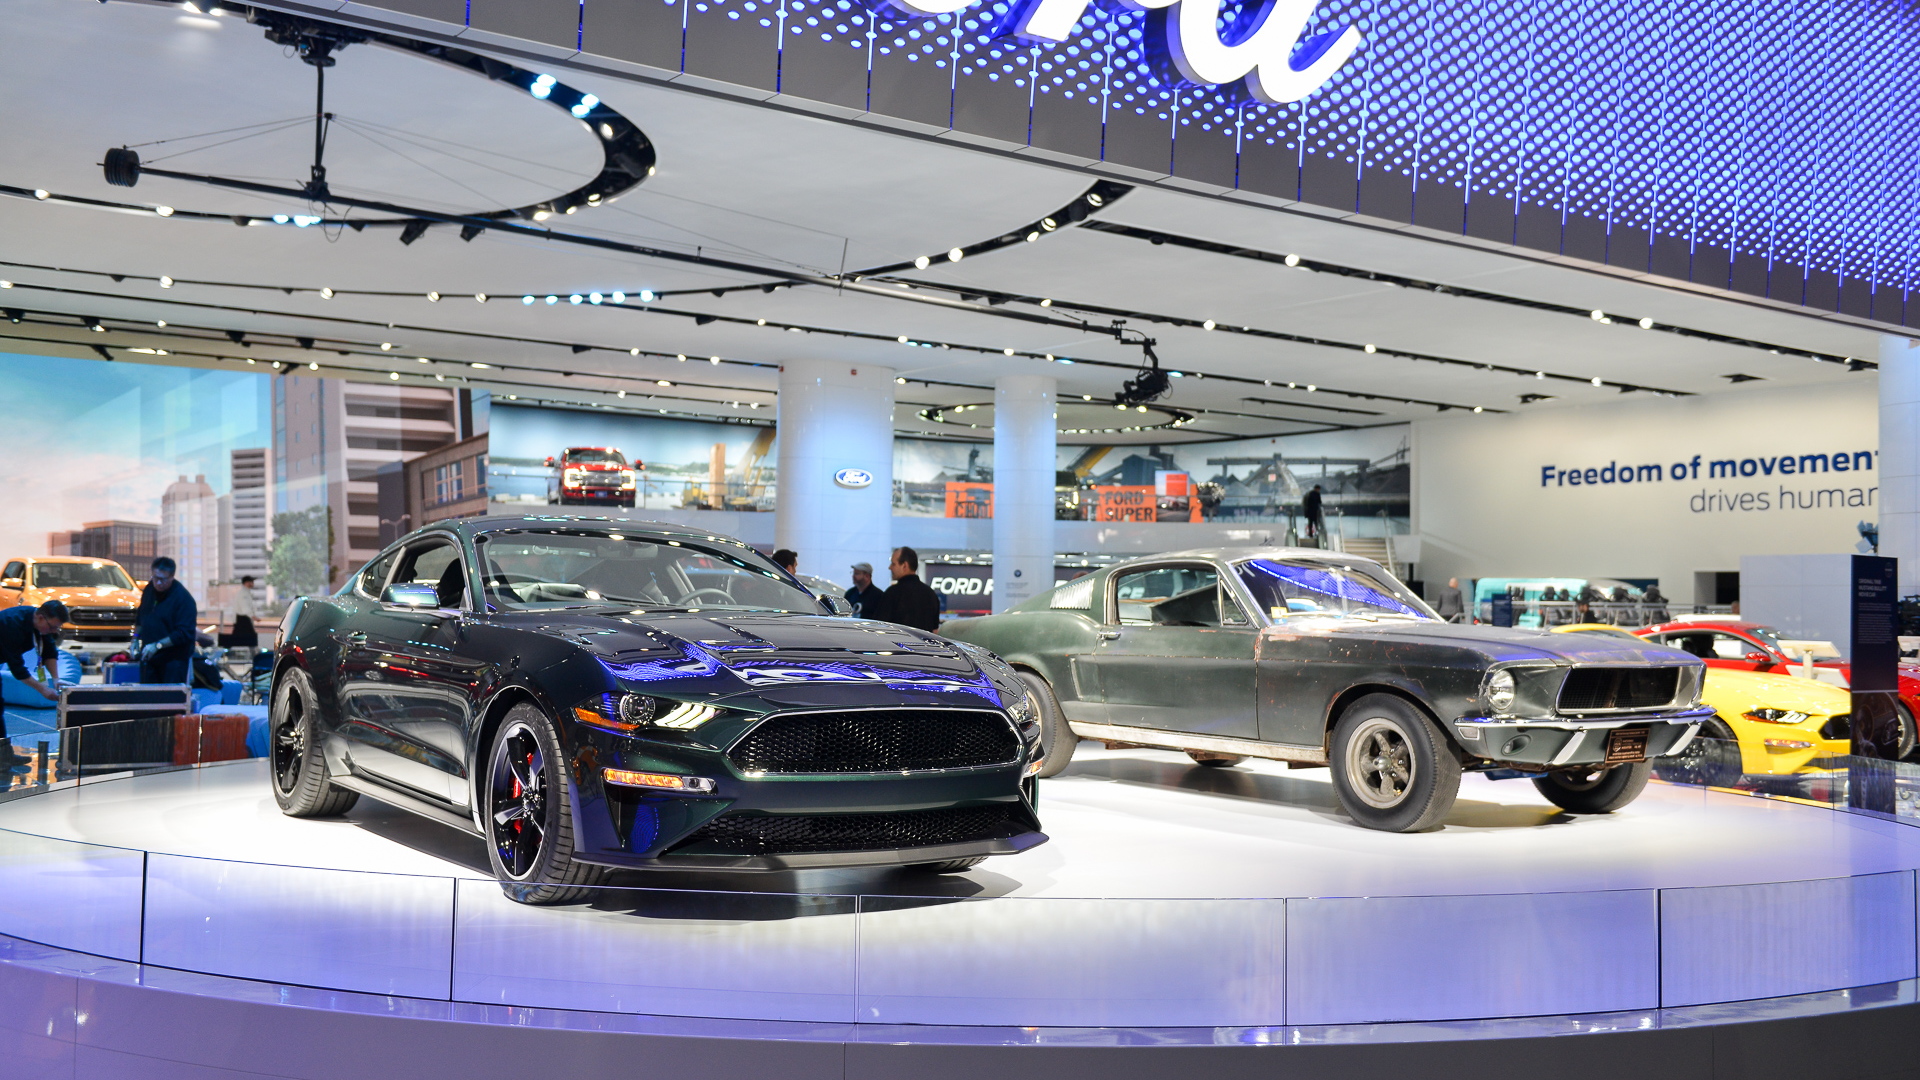 2019 Ford Mustang Bullitt, 2018 Detroit auto show